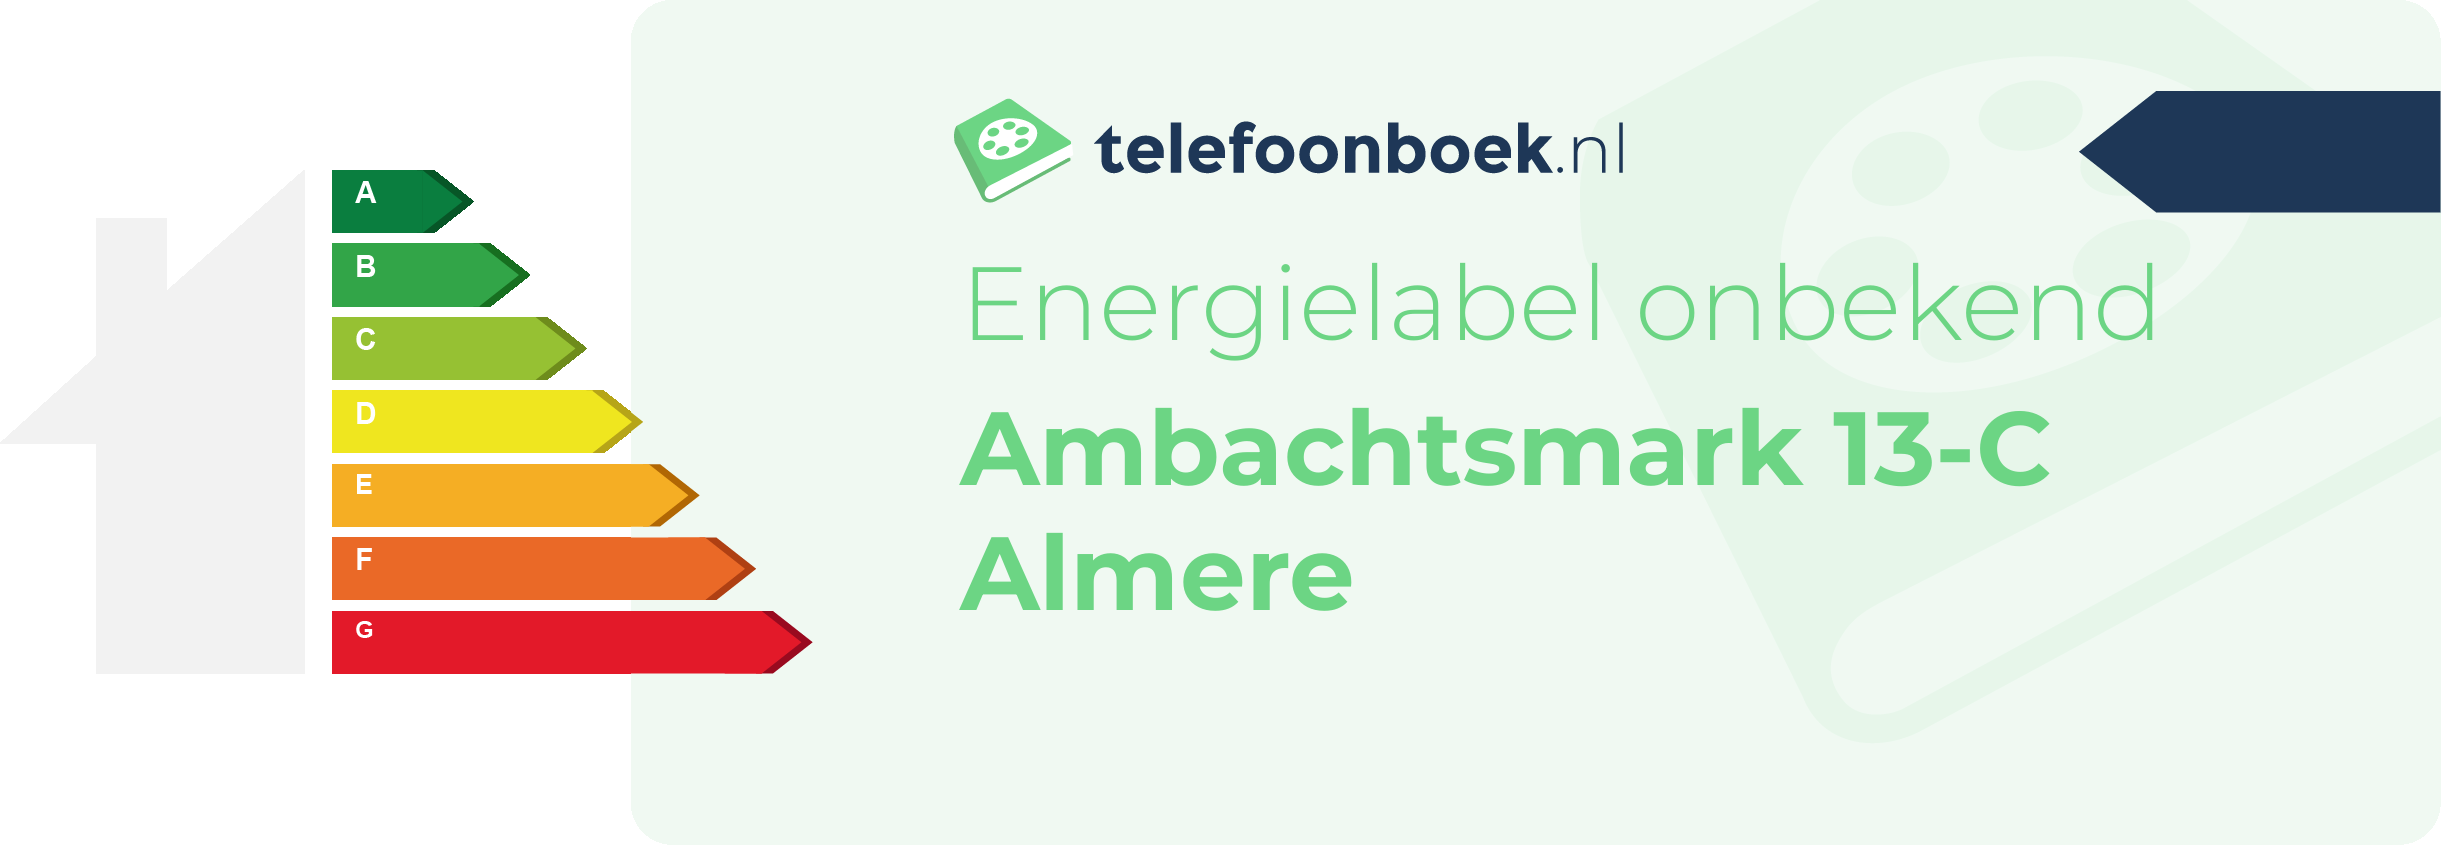 Energielabel Ambachtsmark 13-C Almere